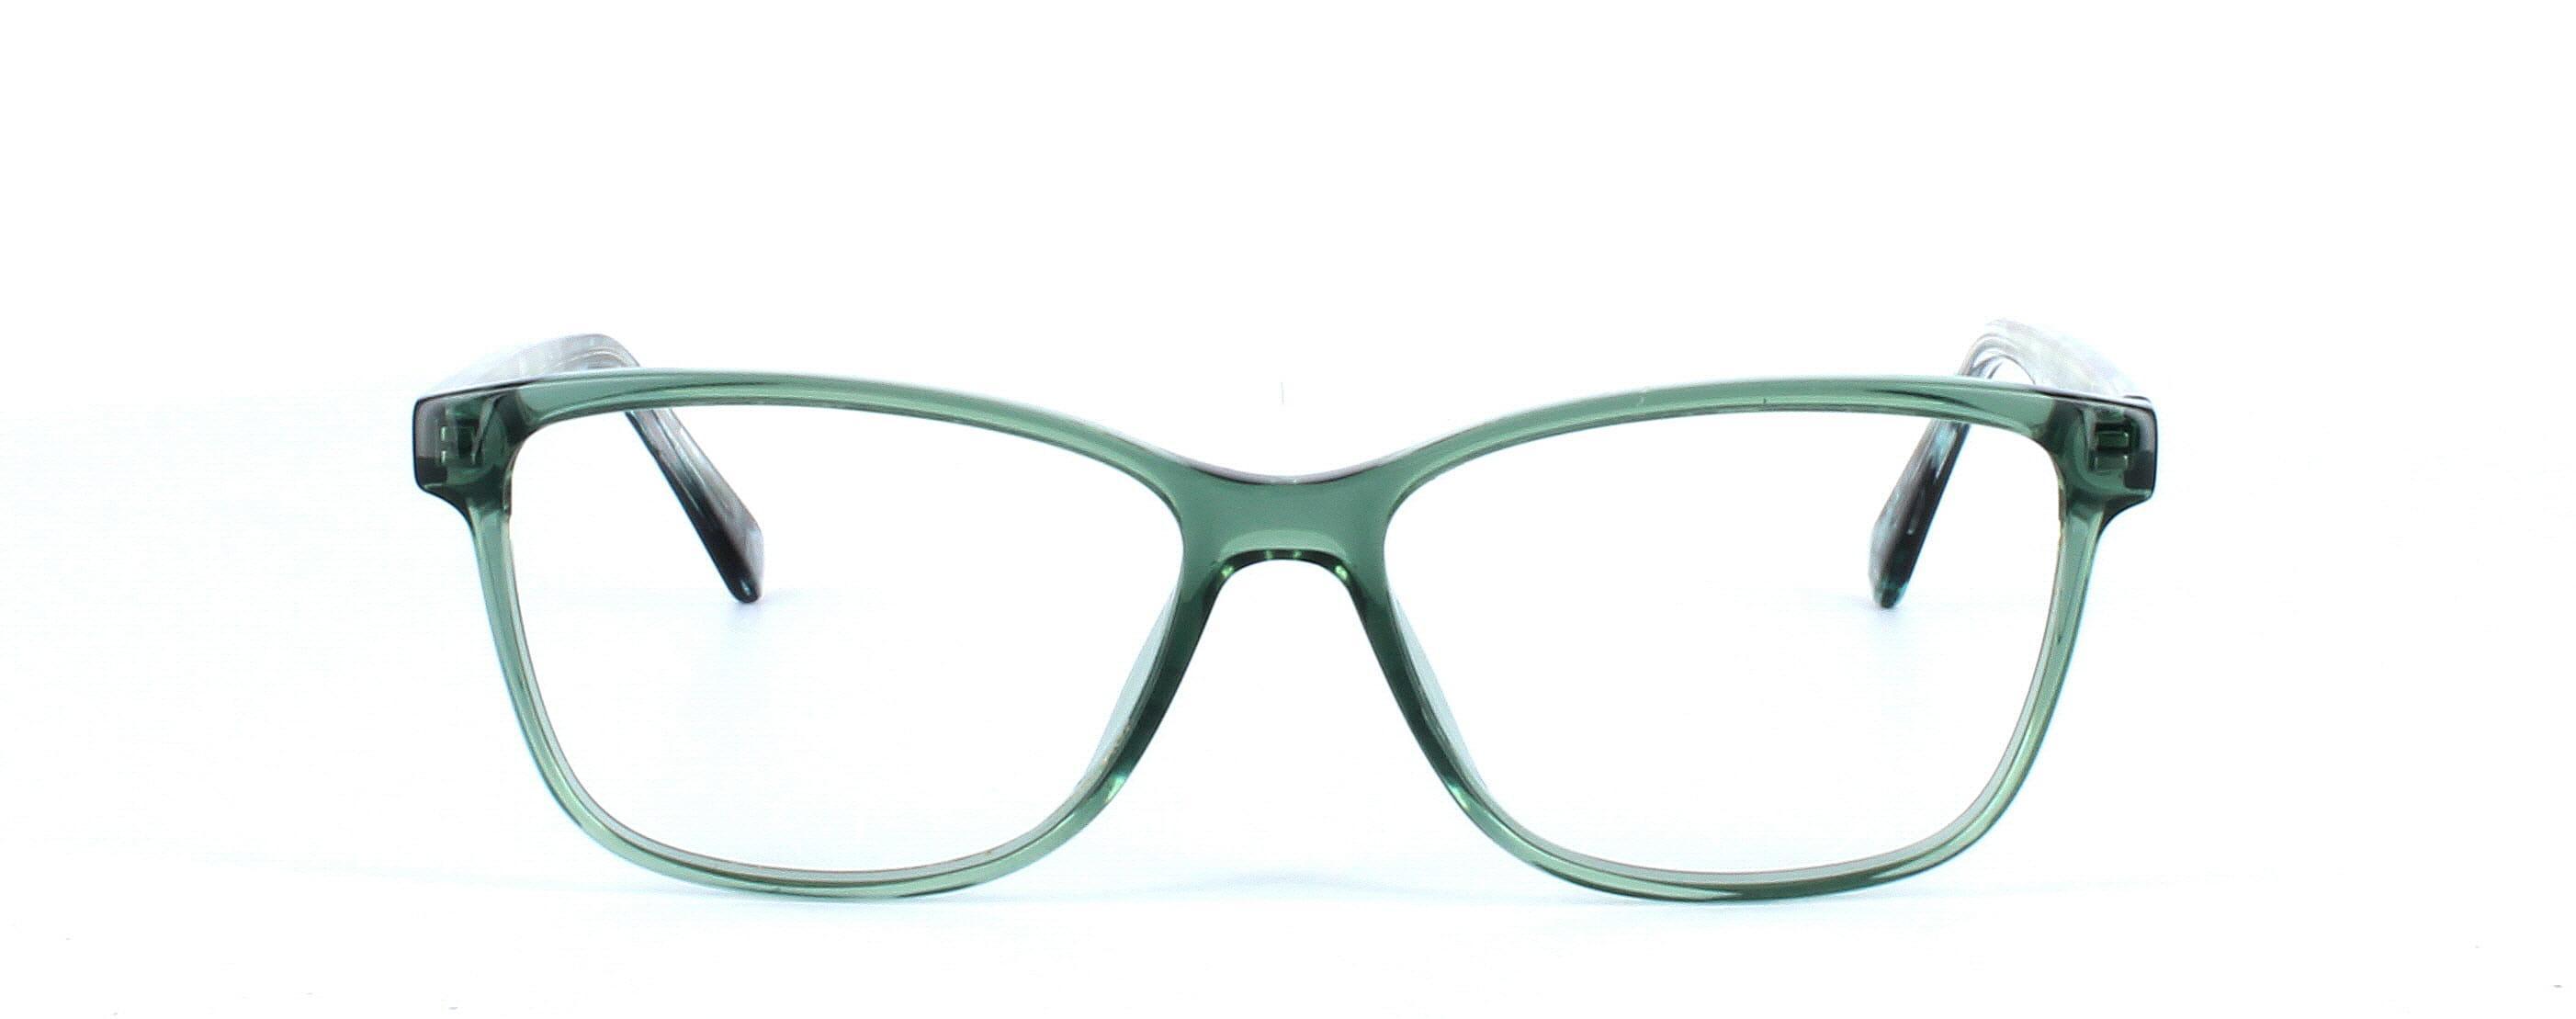 Eris - Ladies plastic rectangular shaped glasses frame - crystal green - image view 5